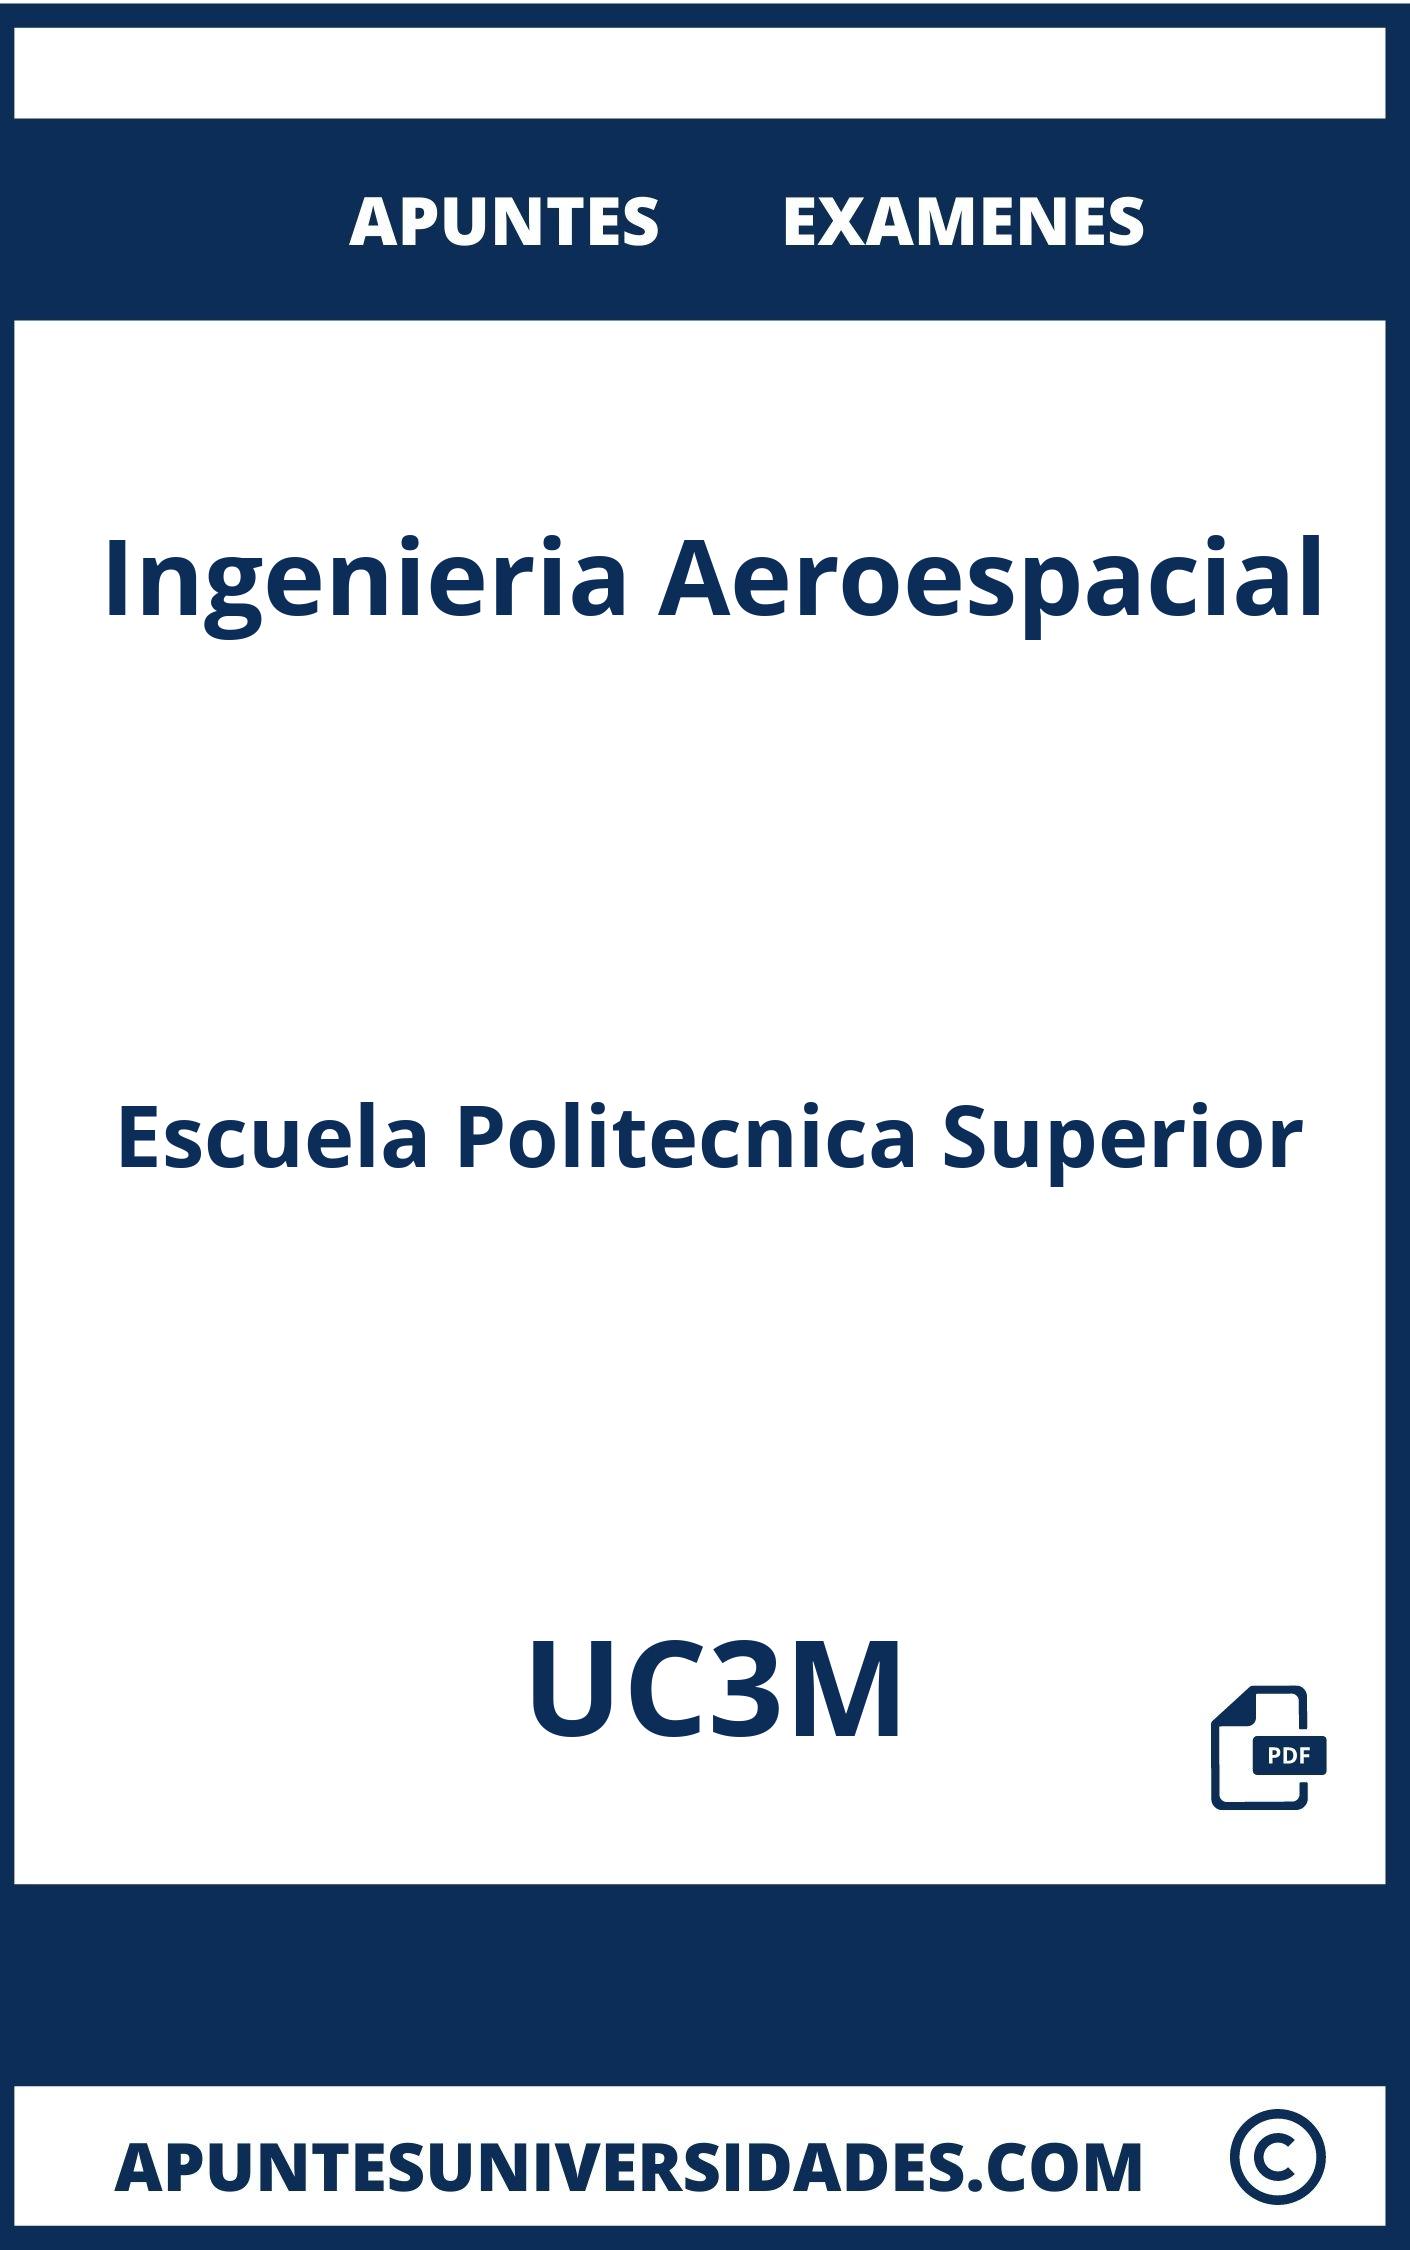 Examenes Apuntes Ingenieria Aeroespacial UC3M